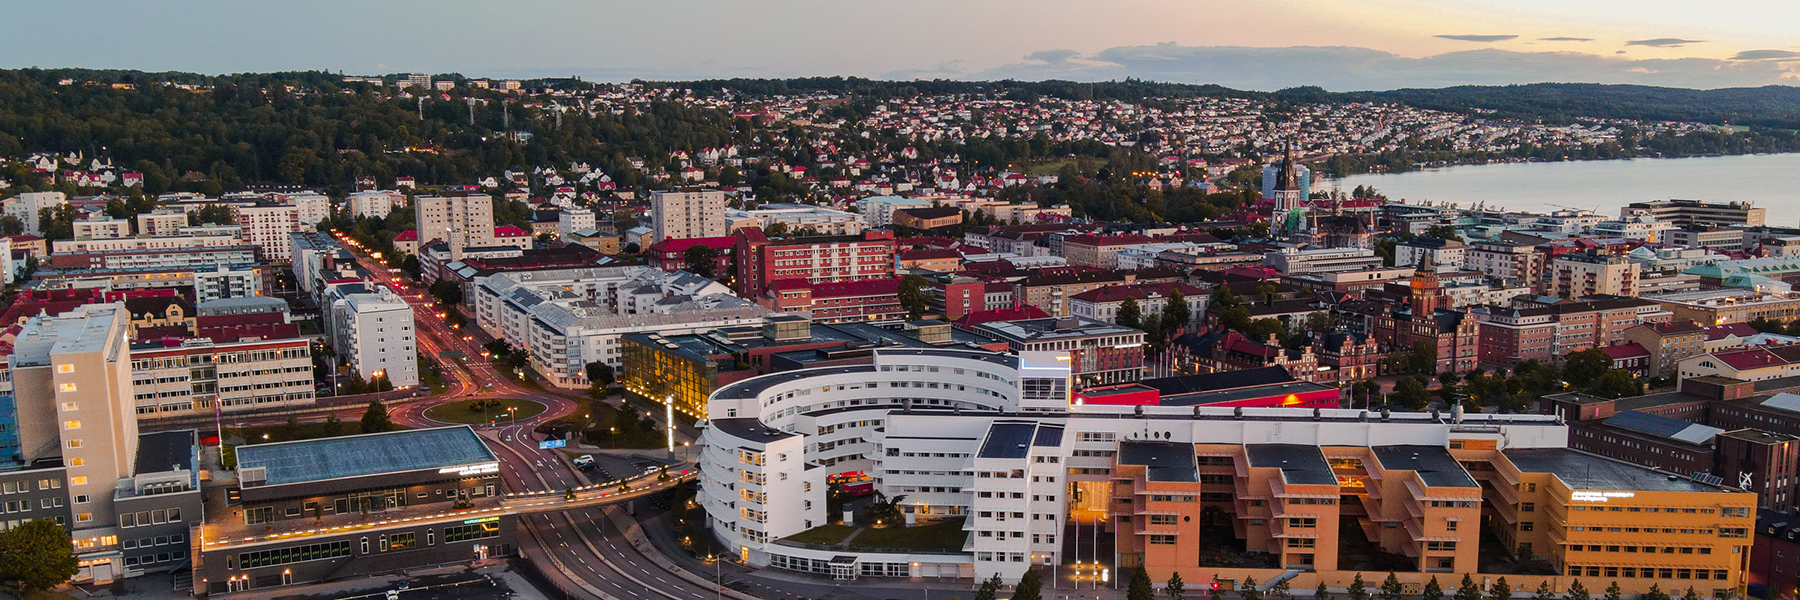 Overhead view of the Swedish city of Jönköping